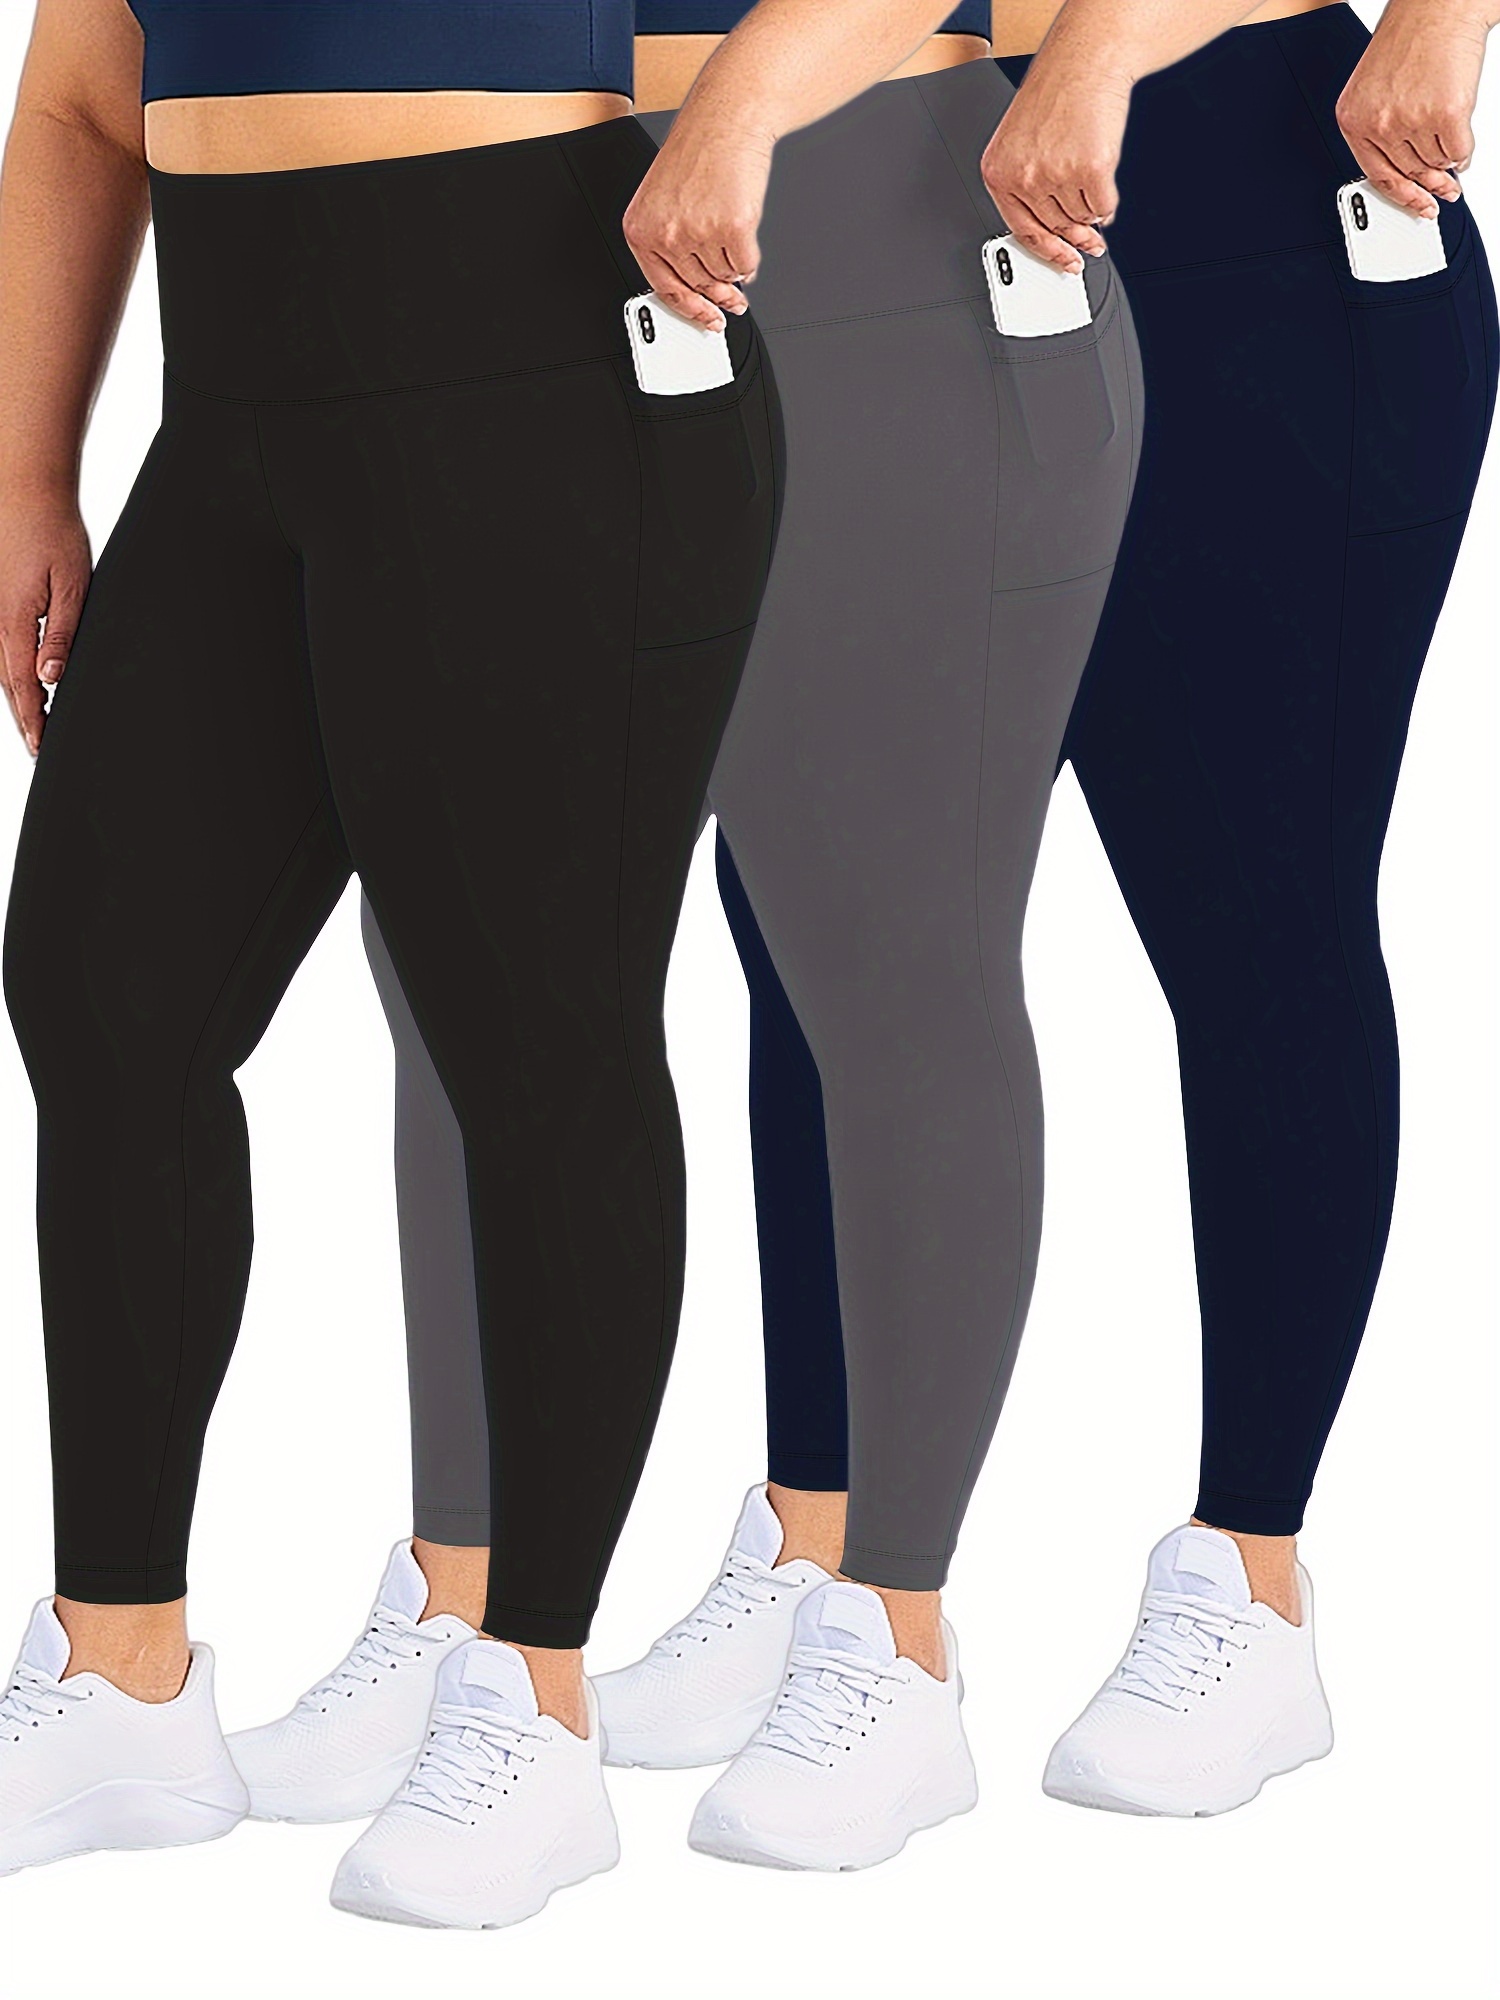 Plus Size Leggings for Women Tummy Control Stretch Solid